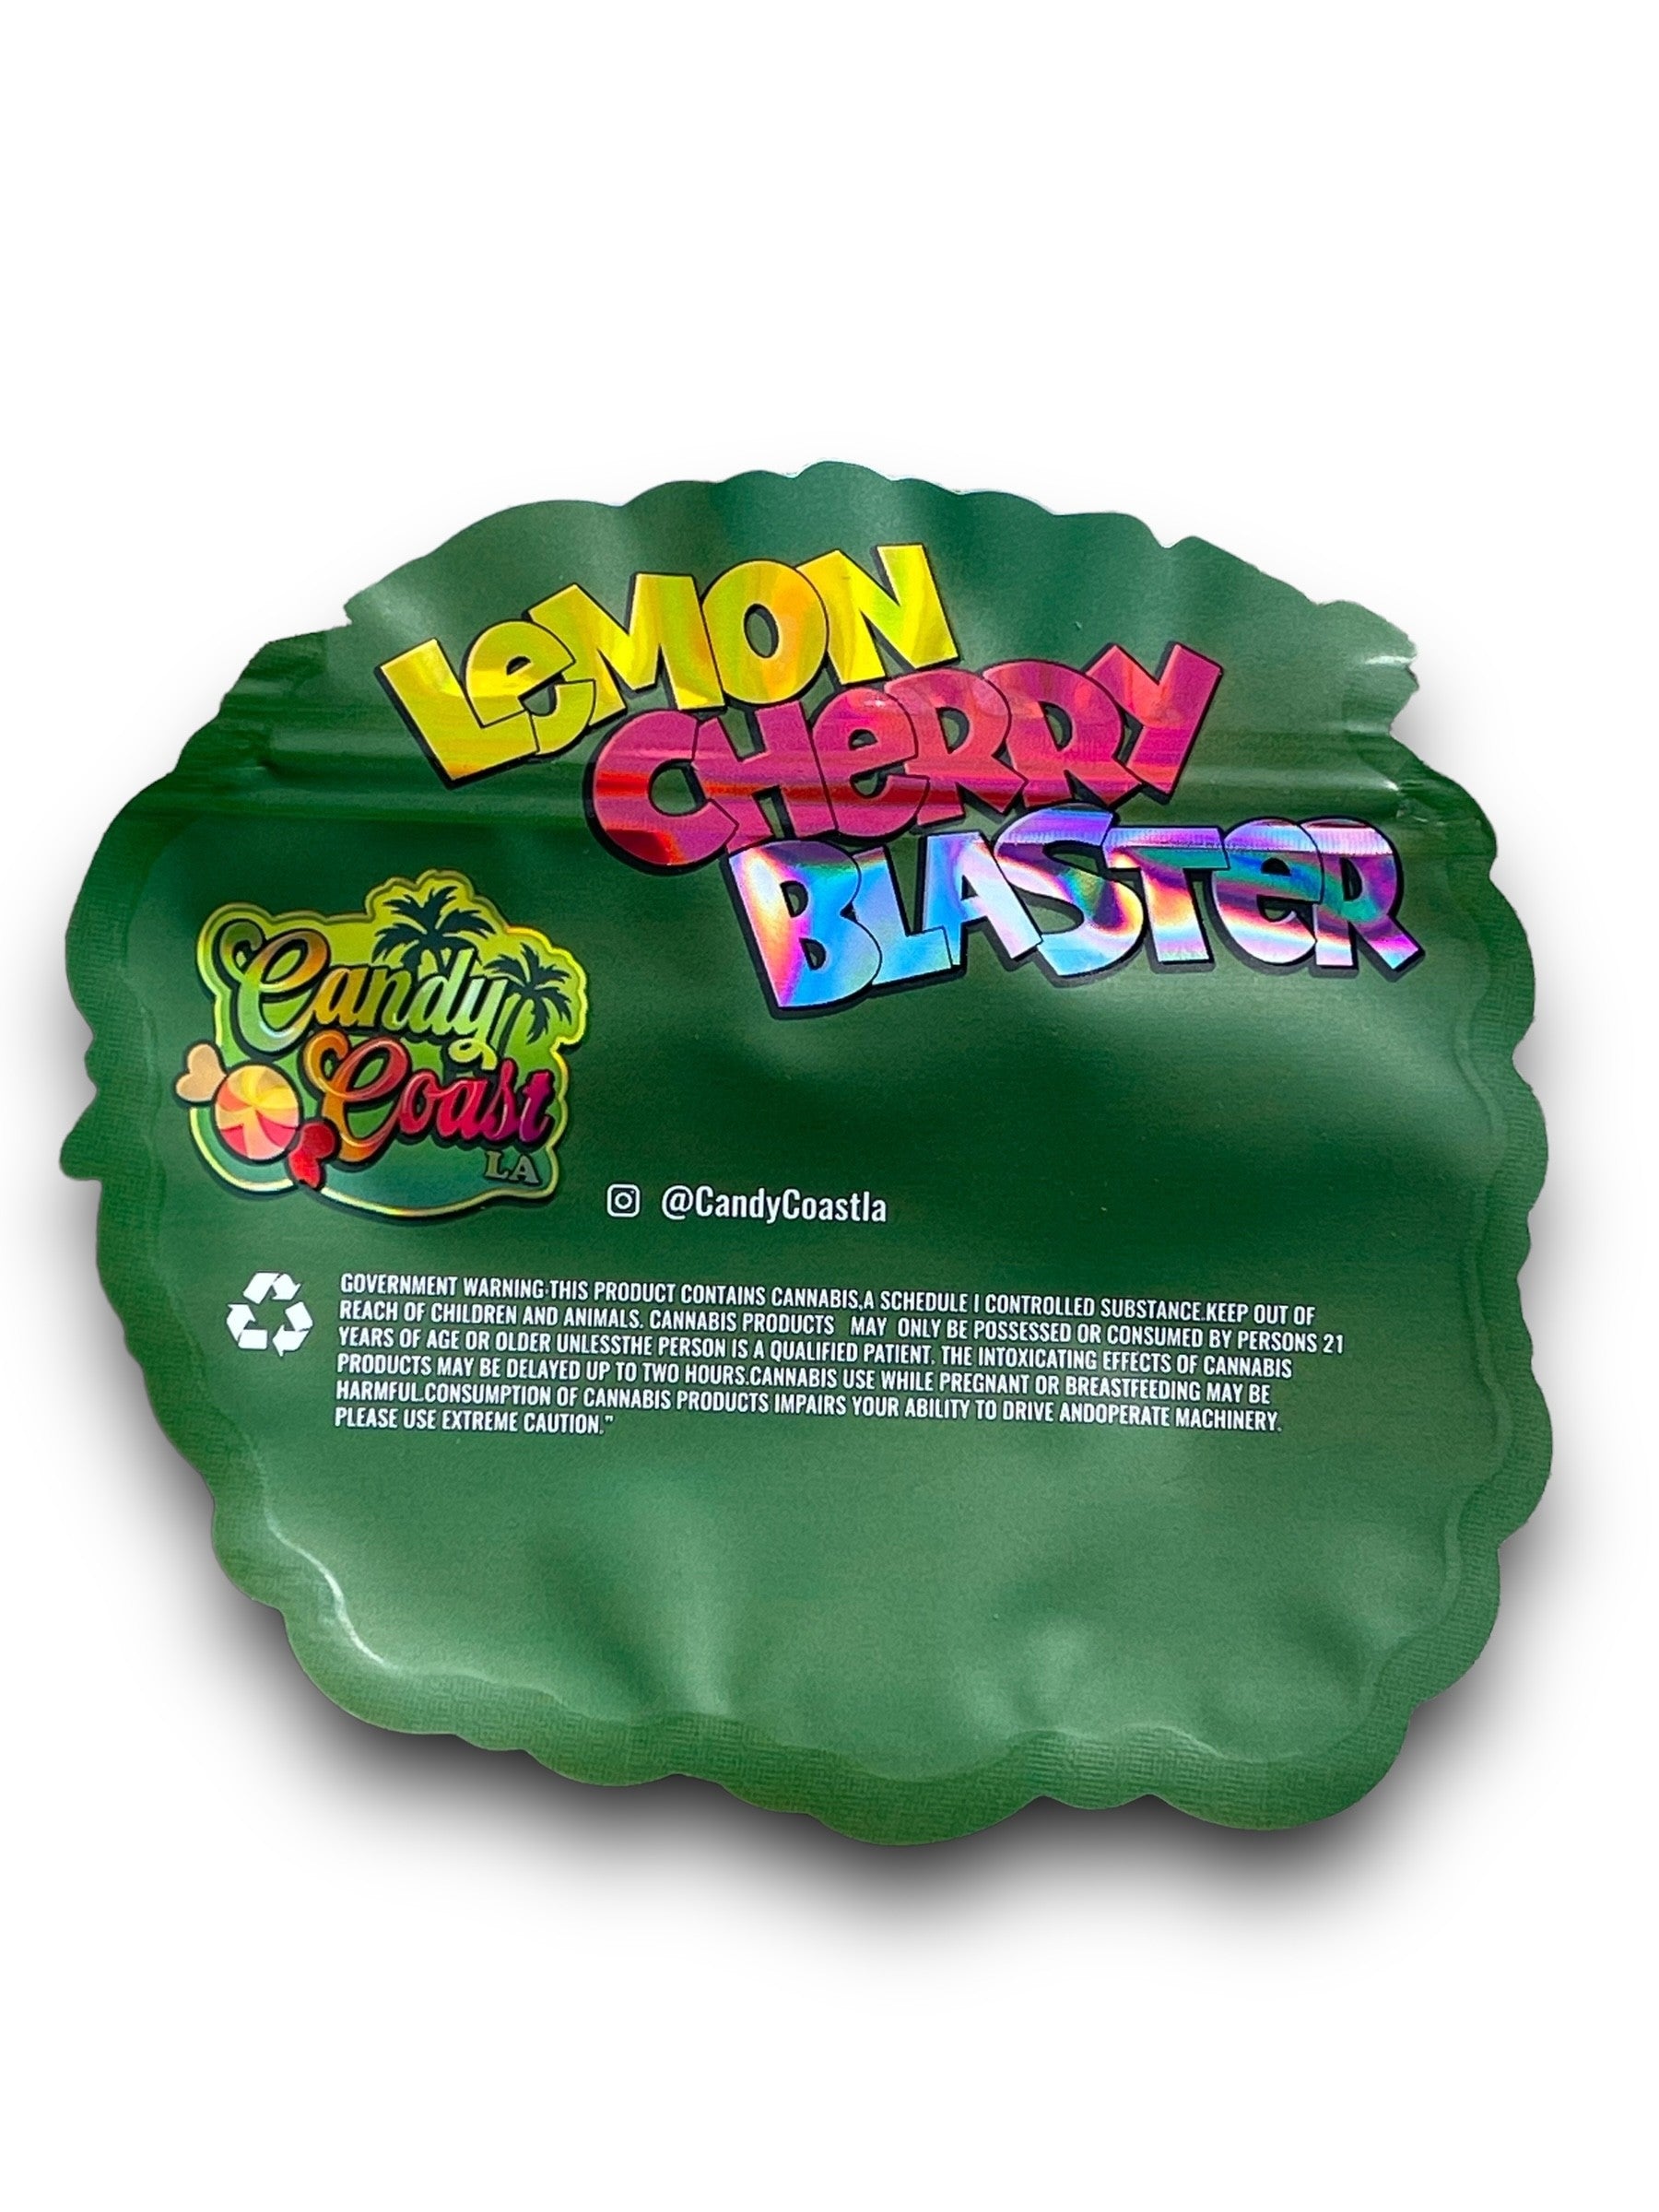 Lemon Cherry Blaster 3.5G Mylar Bags Candy Coast LA-Holographic cut out